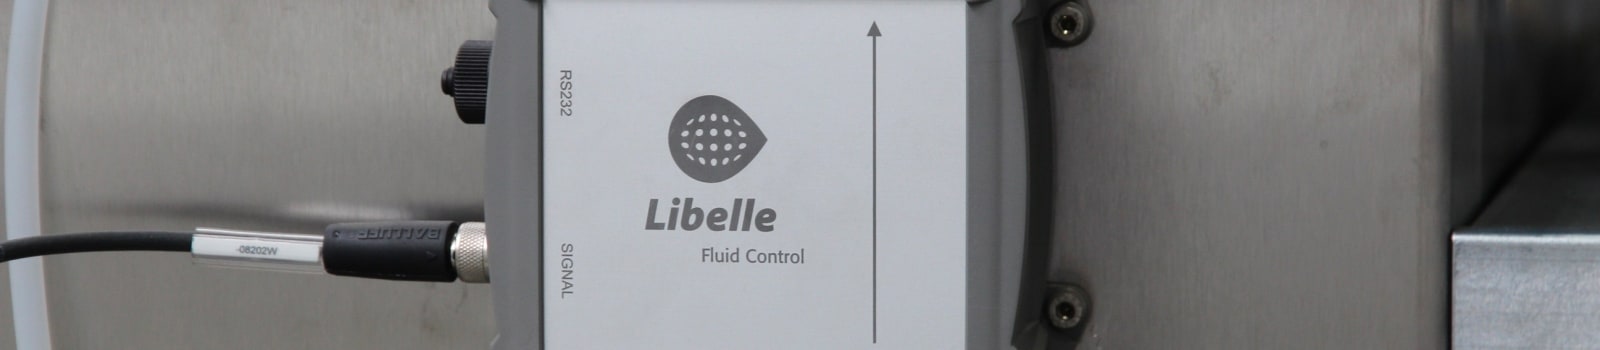 Libelle Fluid Control